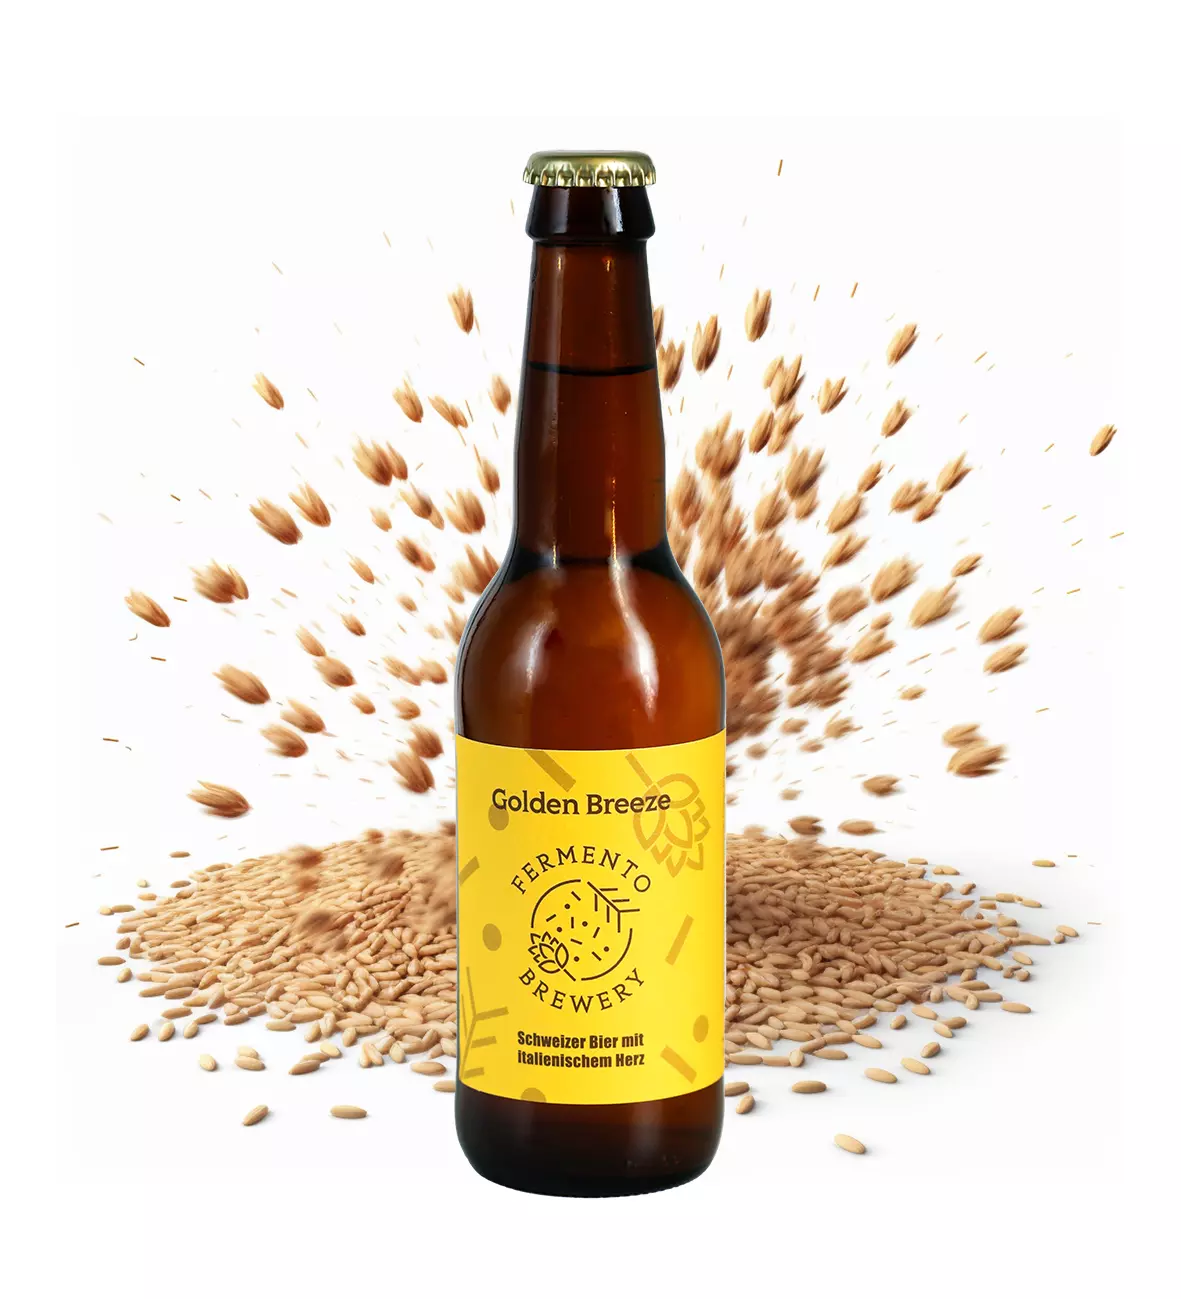 Golden Breeze Pilsner - Fermento Brewery- Esotico